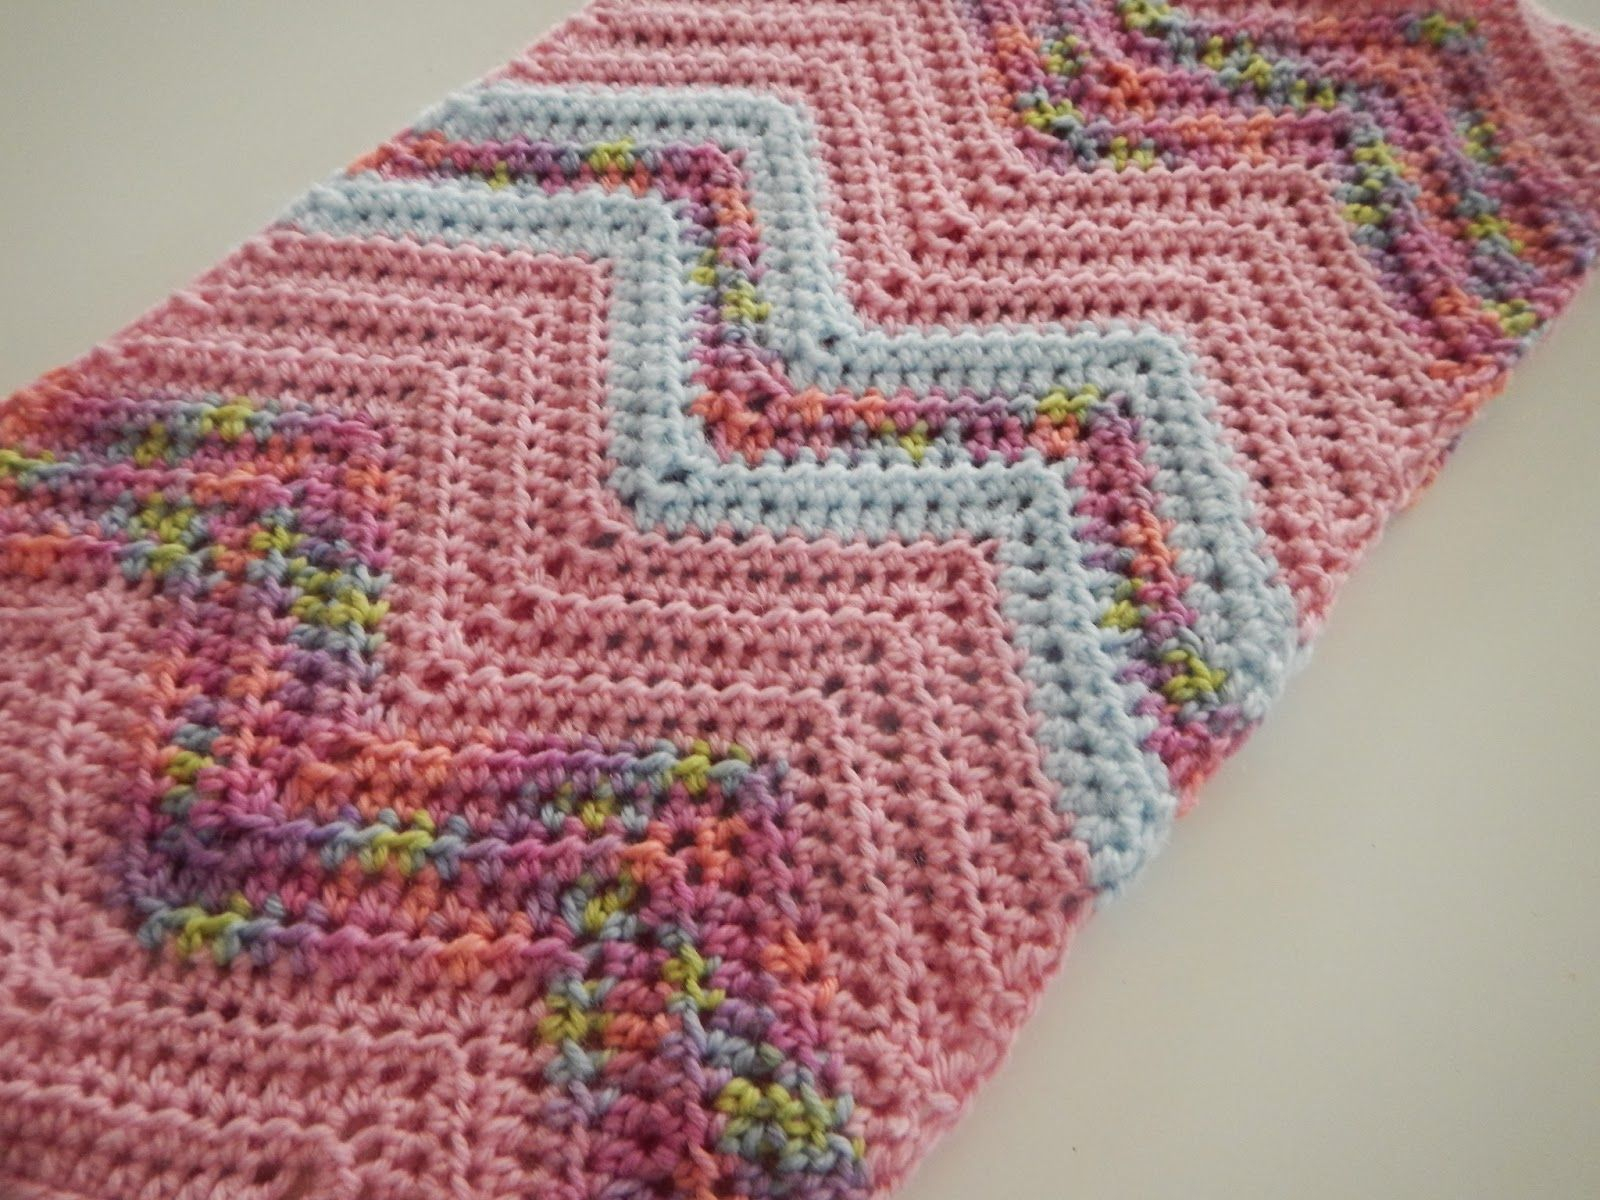 Chevron Crochet Pattern Scarf Apple Blossom Dreams Chevron Infinity Scarf In Hdc Pattern And